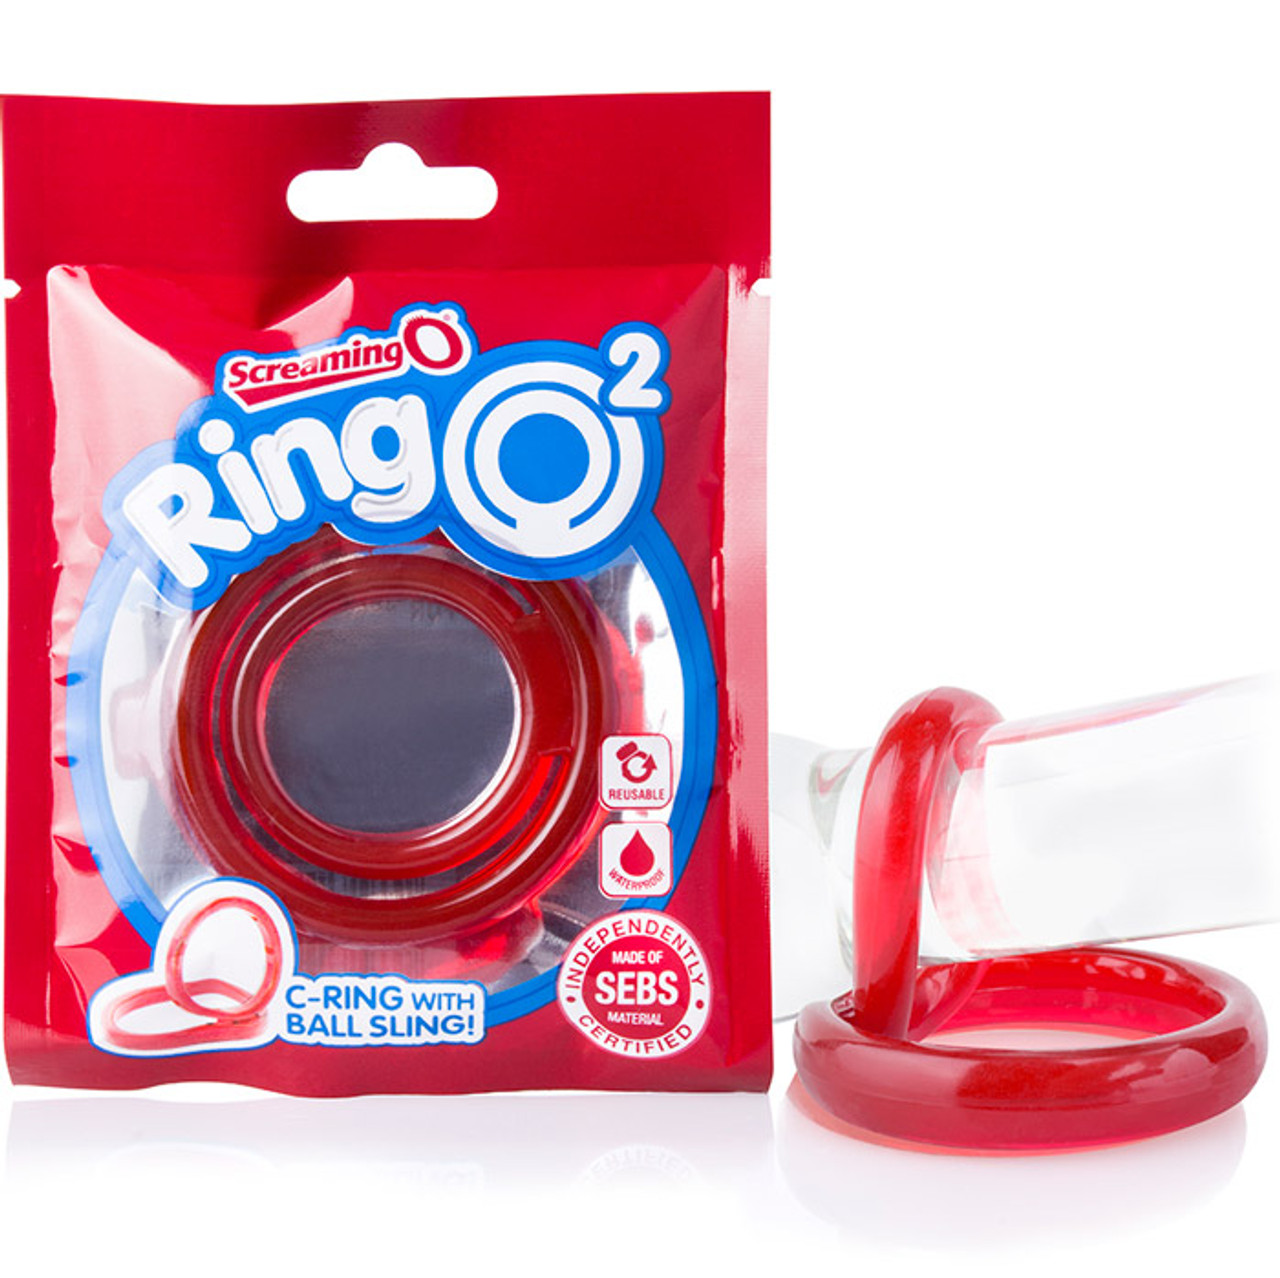 Screaming O RingO Pro XL Silicone Erection Enhancer Penis Ring - Dallas  Novelty - Online Sex Toys Retailer